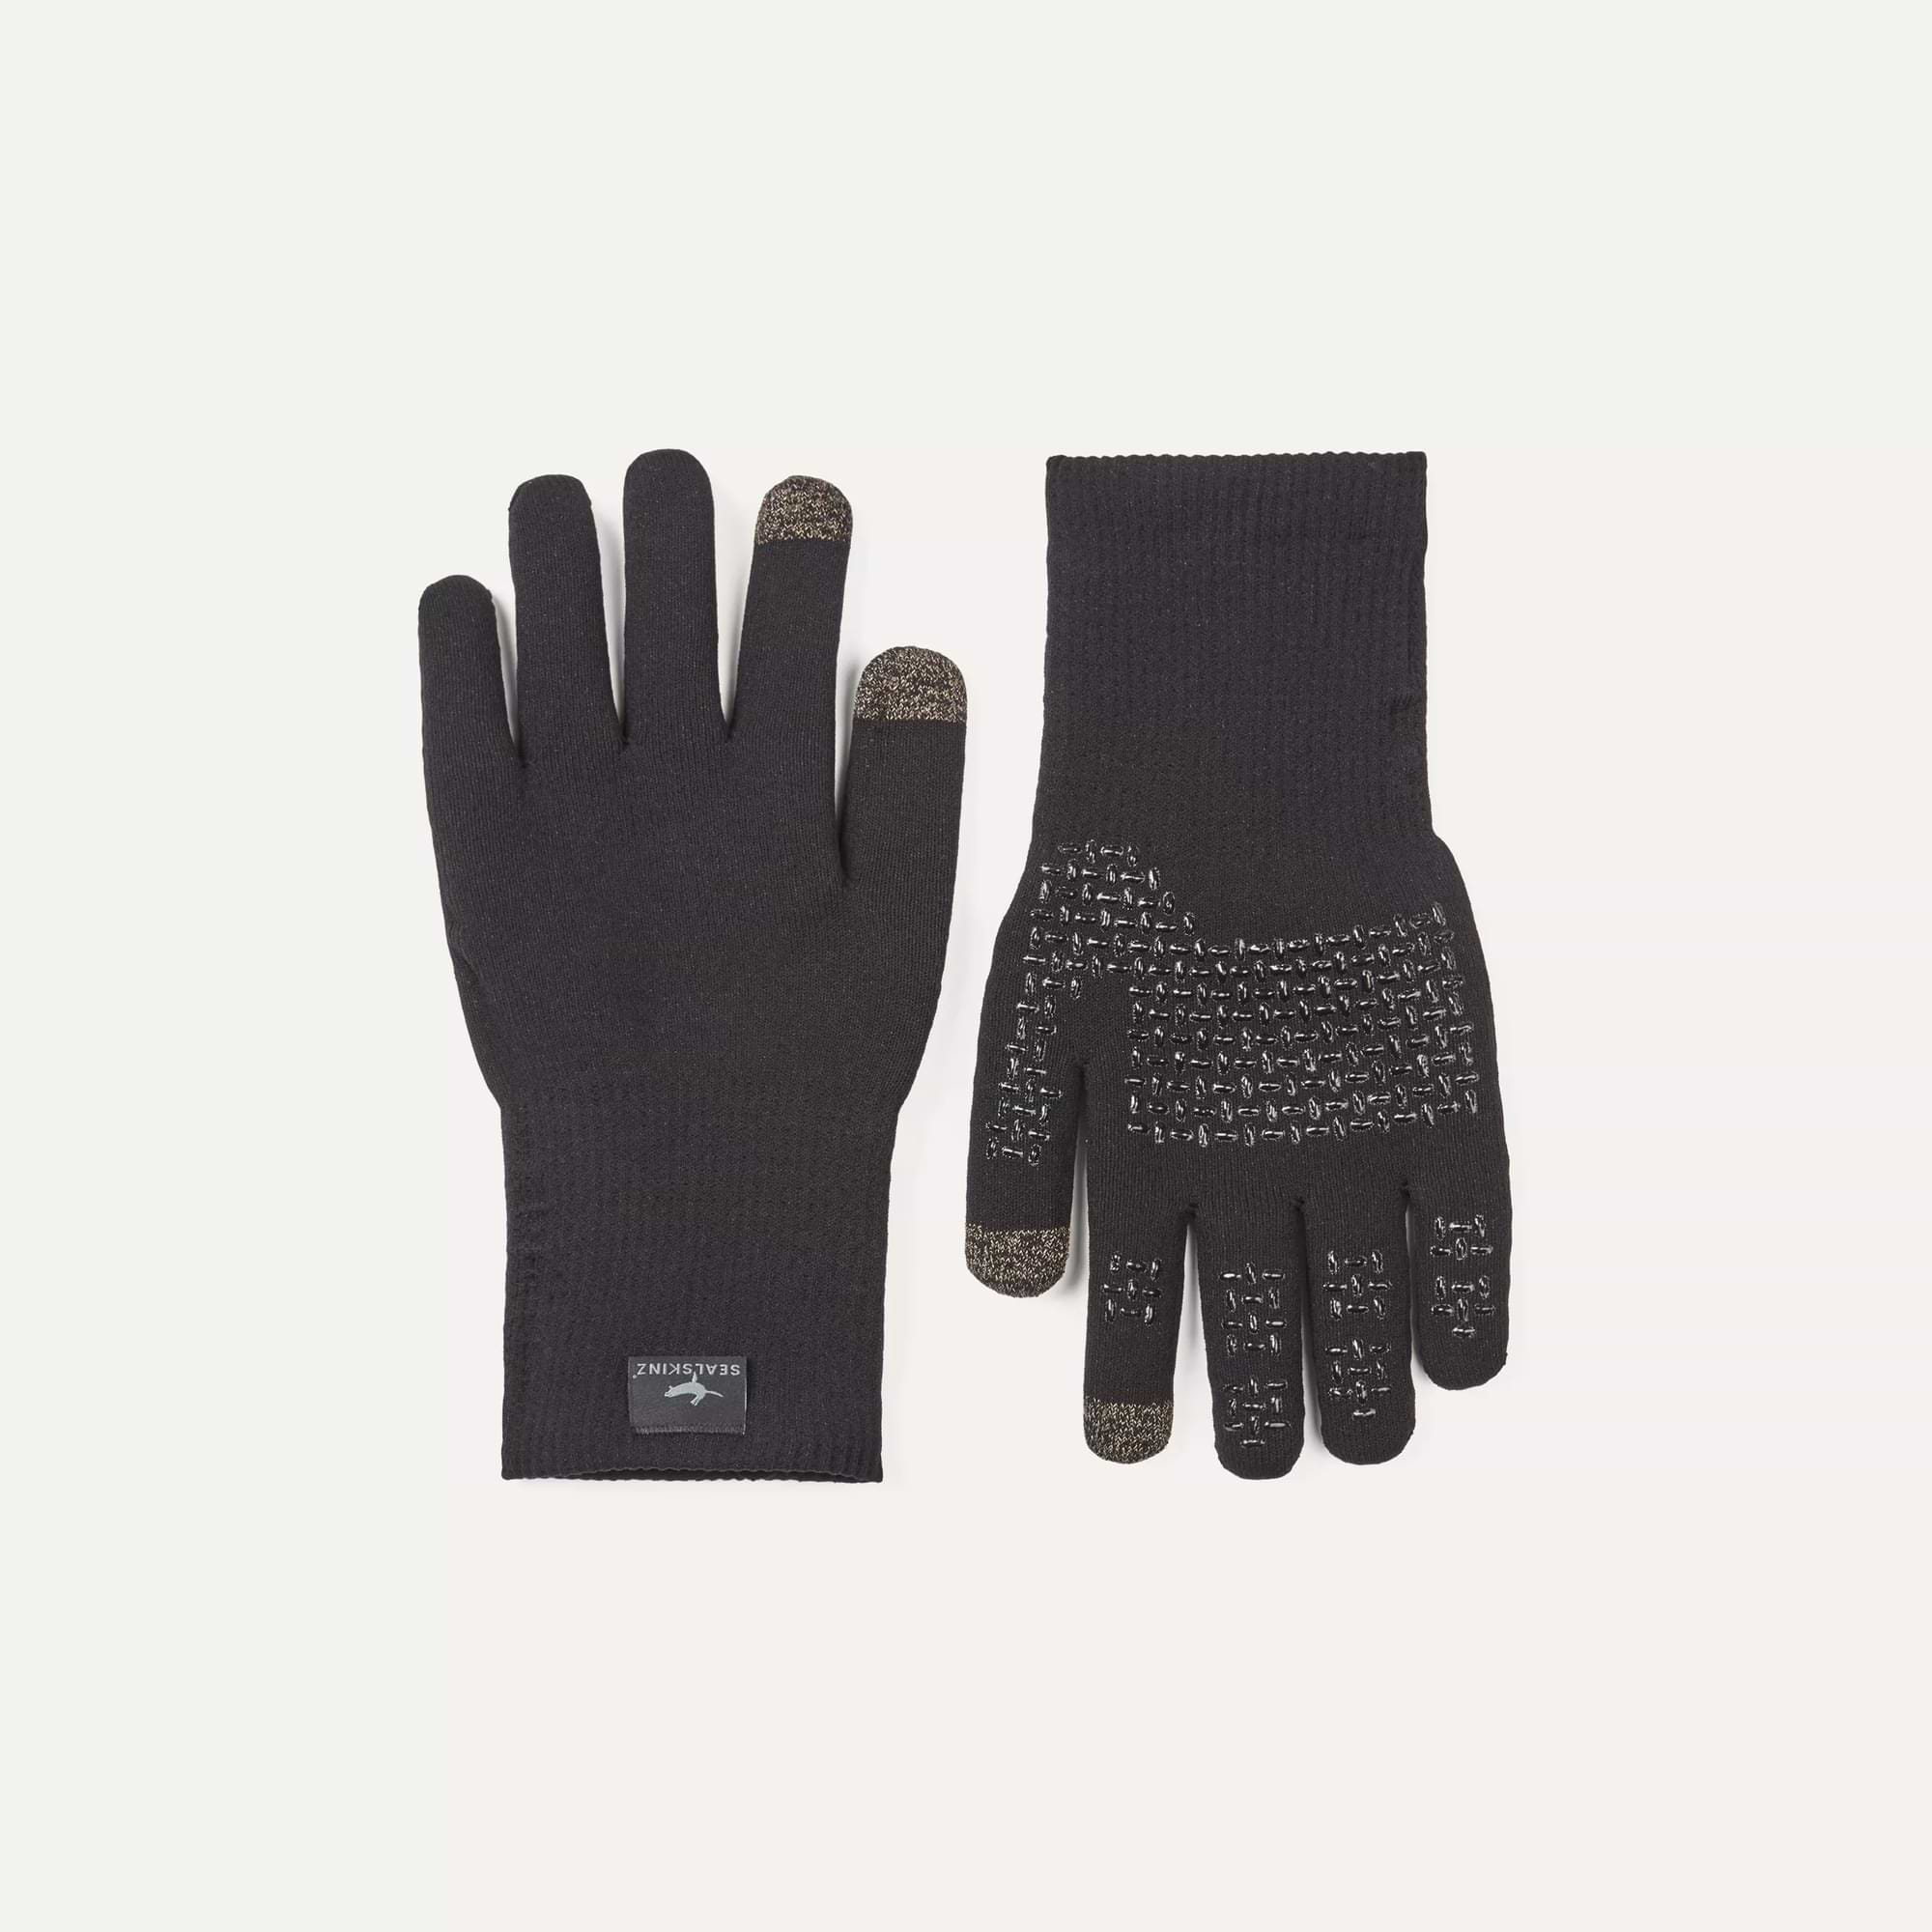 Buy Kayak Gloves for Women - Full Finger Pink Rowing Gloves with Anti Slip  Palm- Ideal for Kayaking, Paddling, Sculling, Fishing, Watersports, Sailing,  Jet Ski and More. Online at desertcartSeychelles